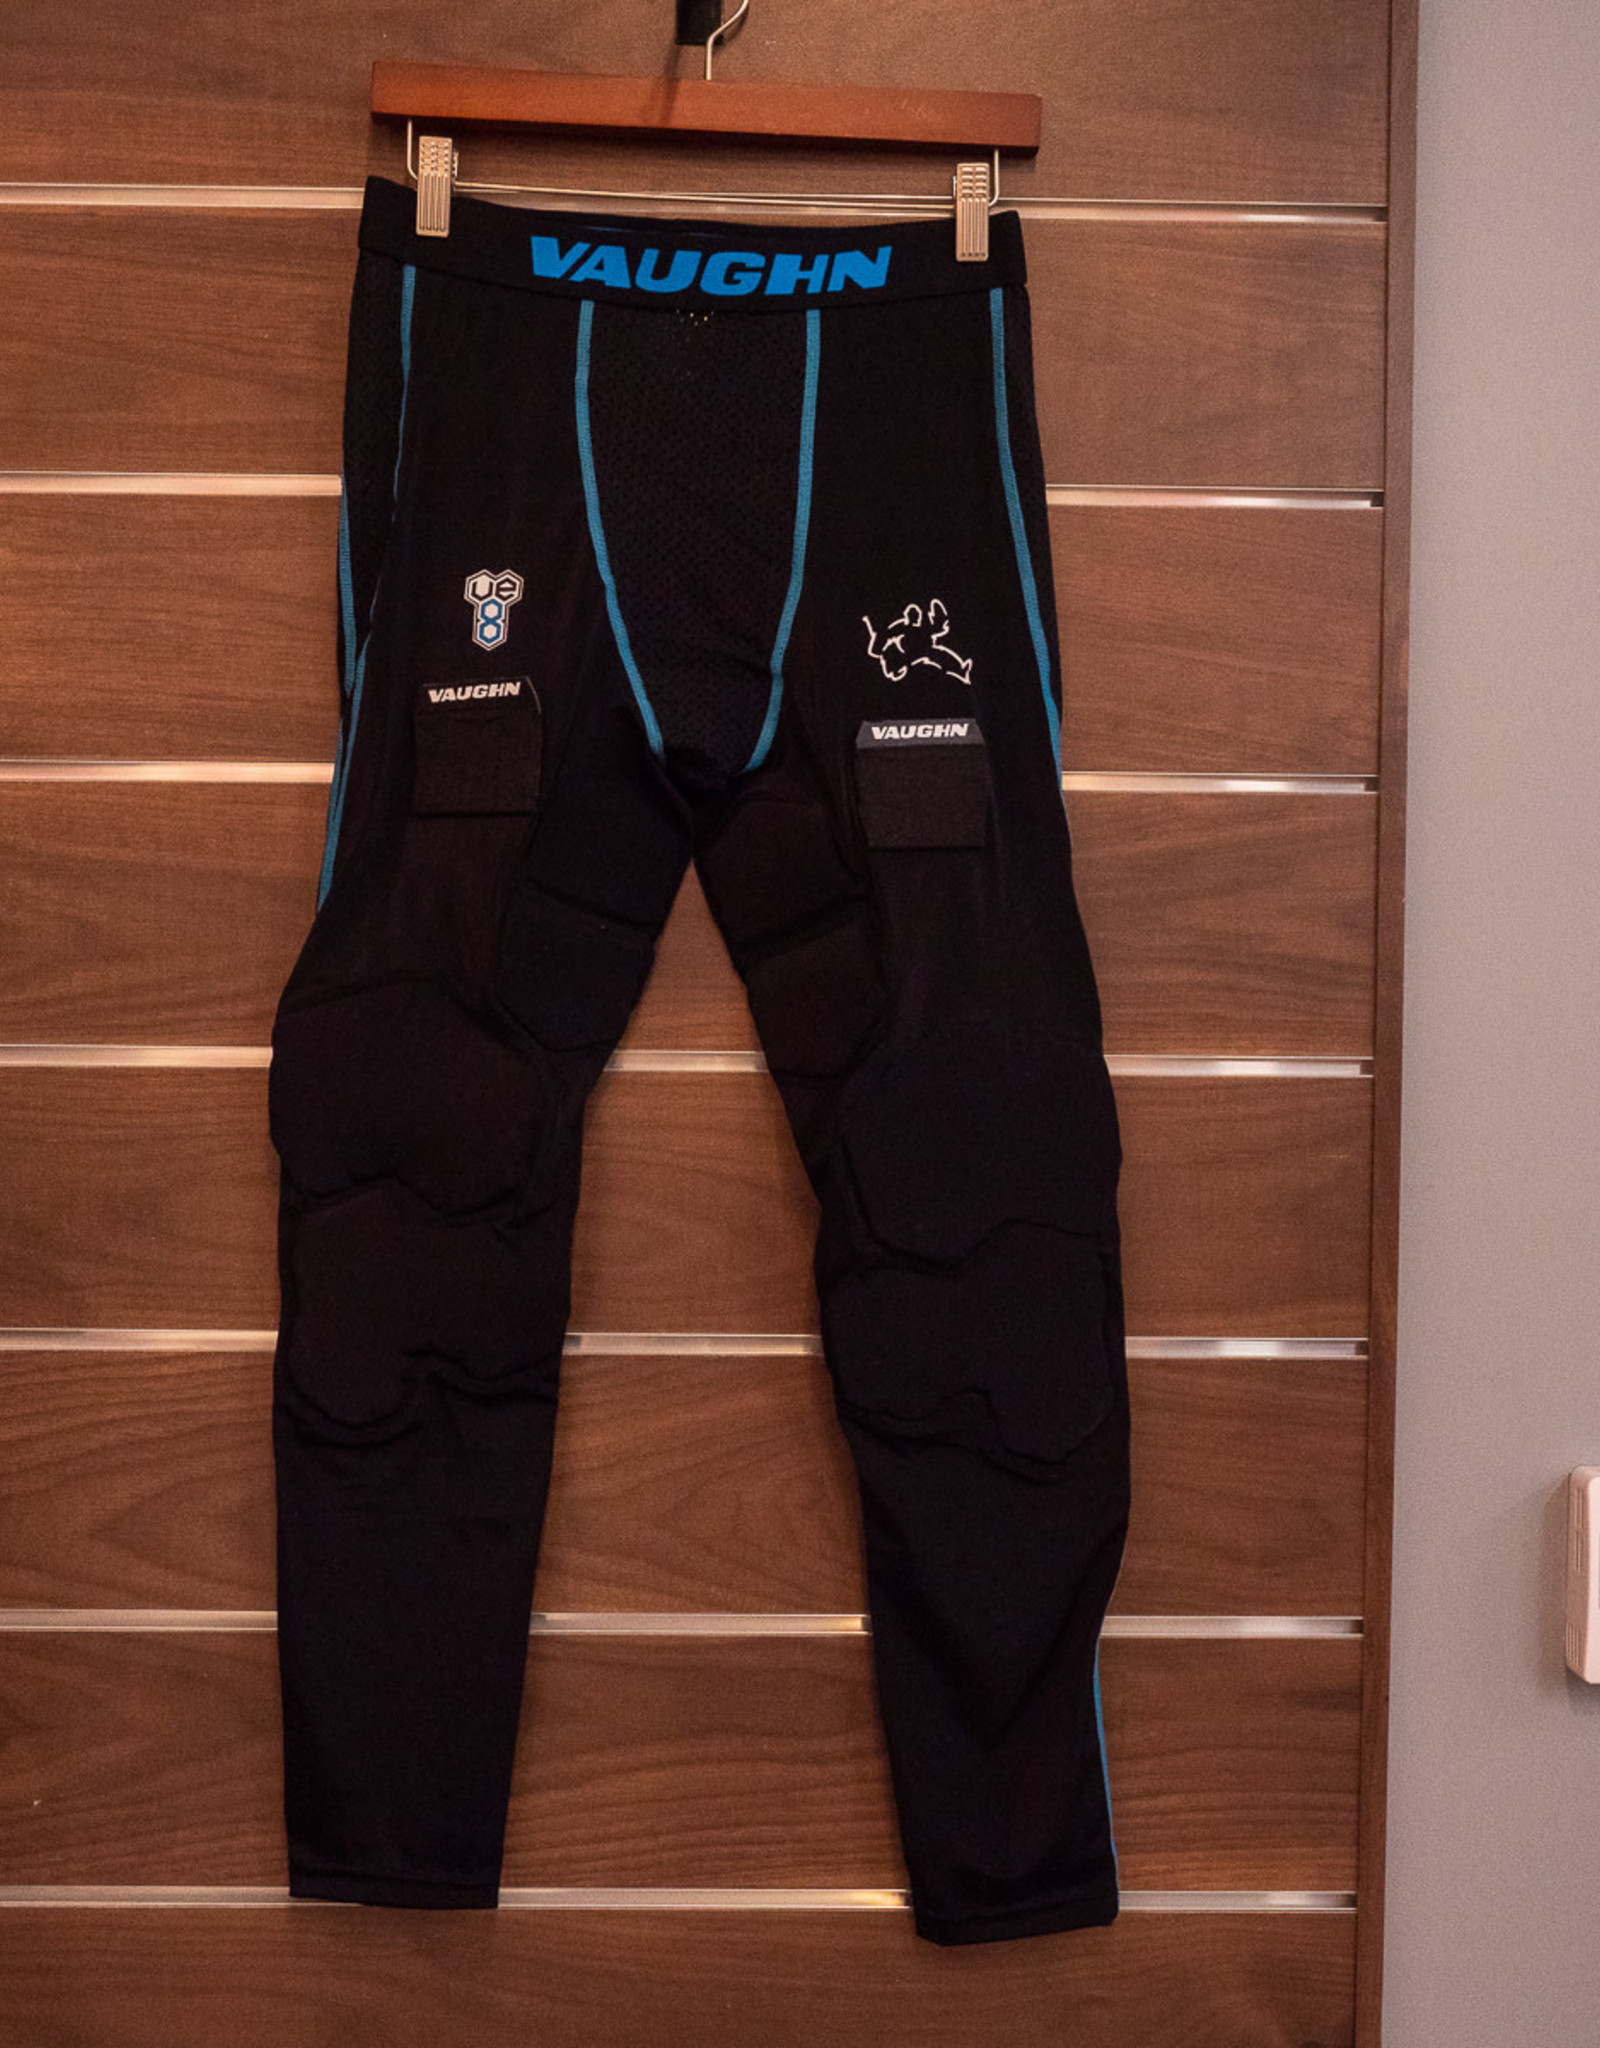 Vaughn Vaughn VE8 Padded Compression Pants - XS